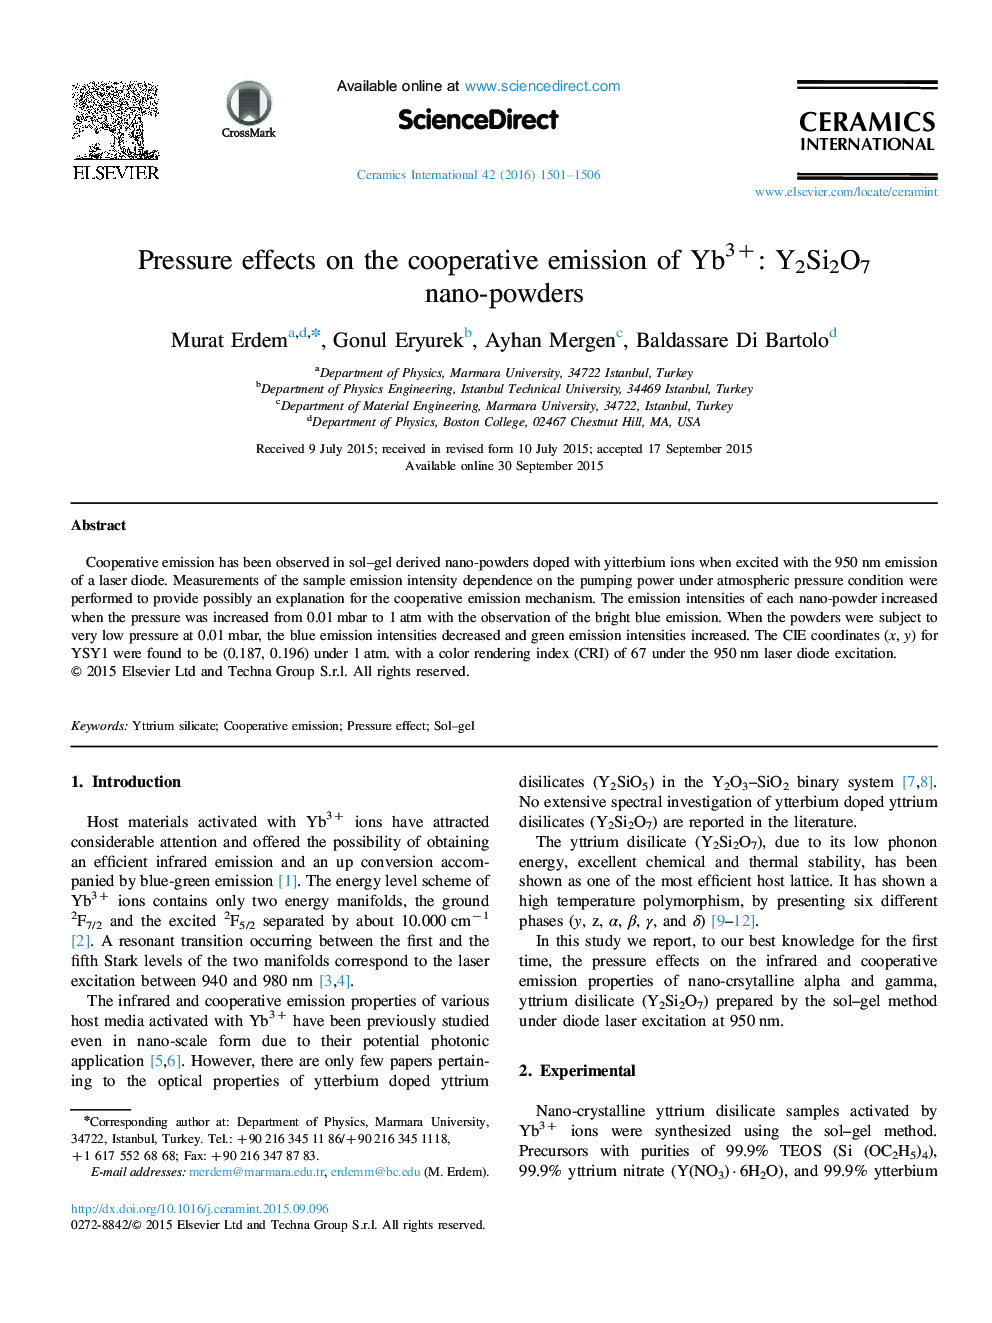 Pressure effects on the cooperative emission of Yb3+: Y2Si2O7 nano-powders